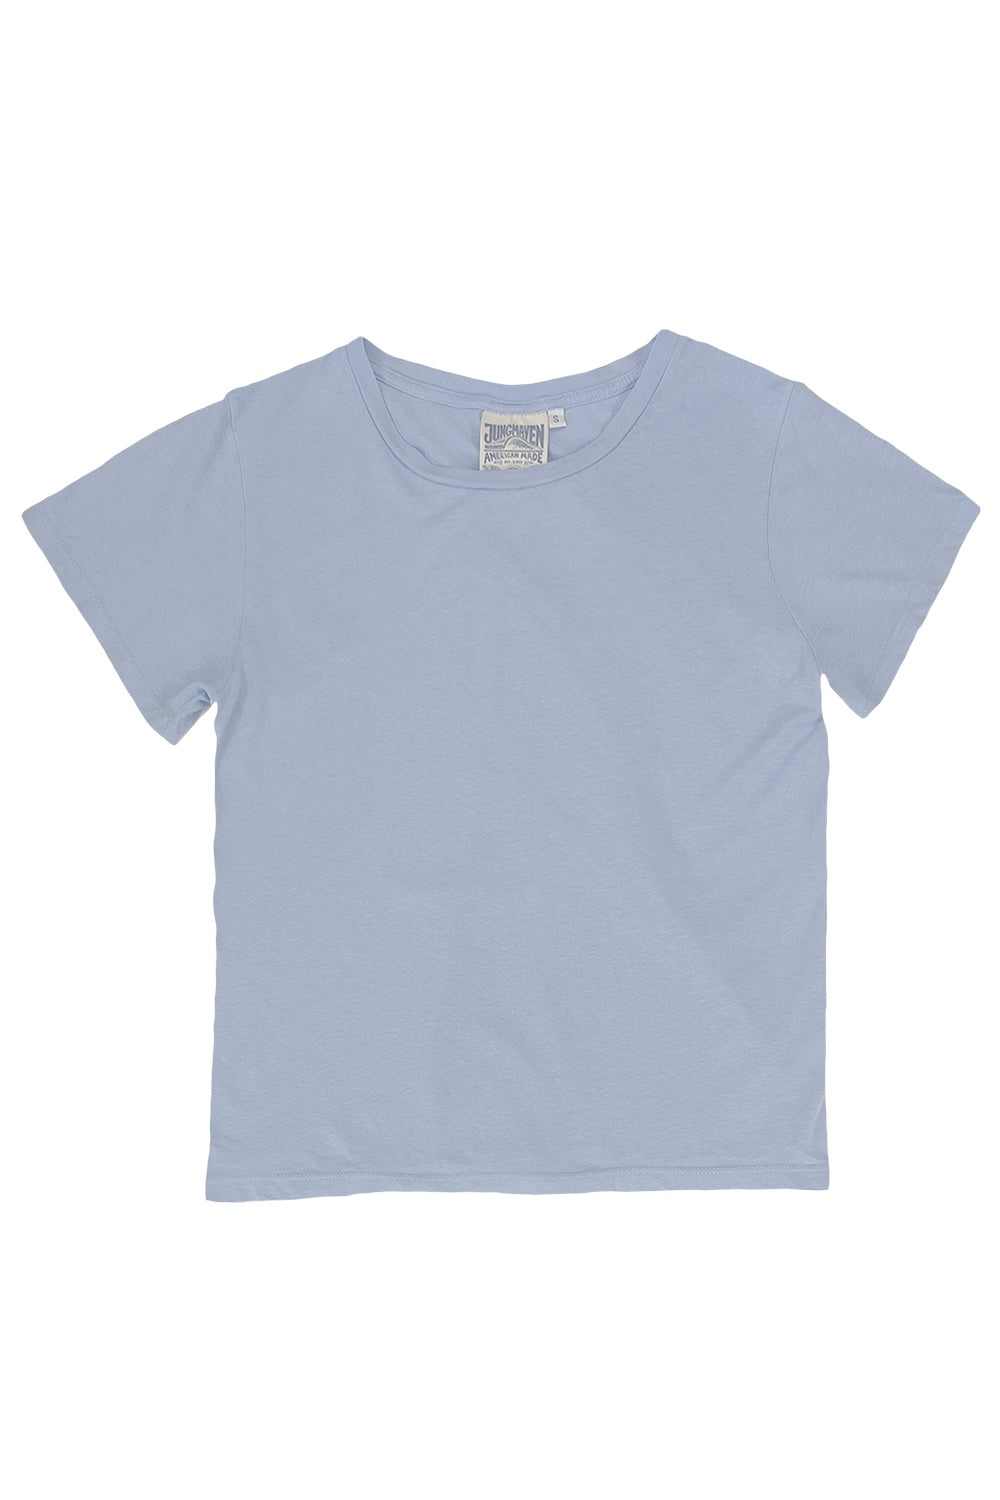 Ojai Tee | Jungmaven Hemp Clothing & Accessories / Color: Coastal Blue